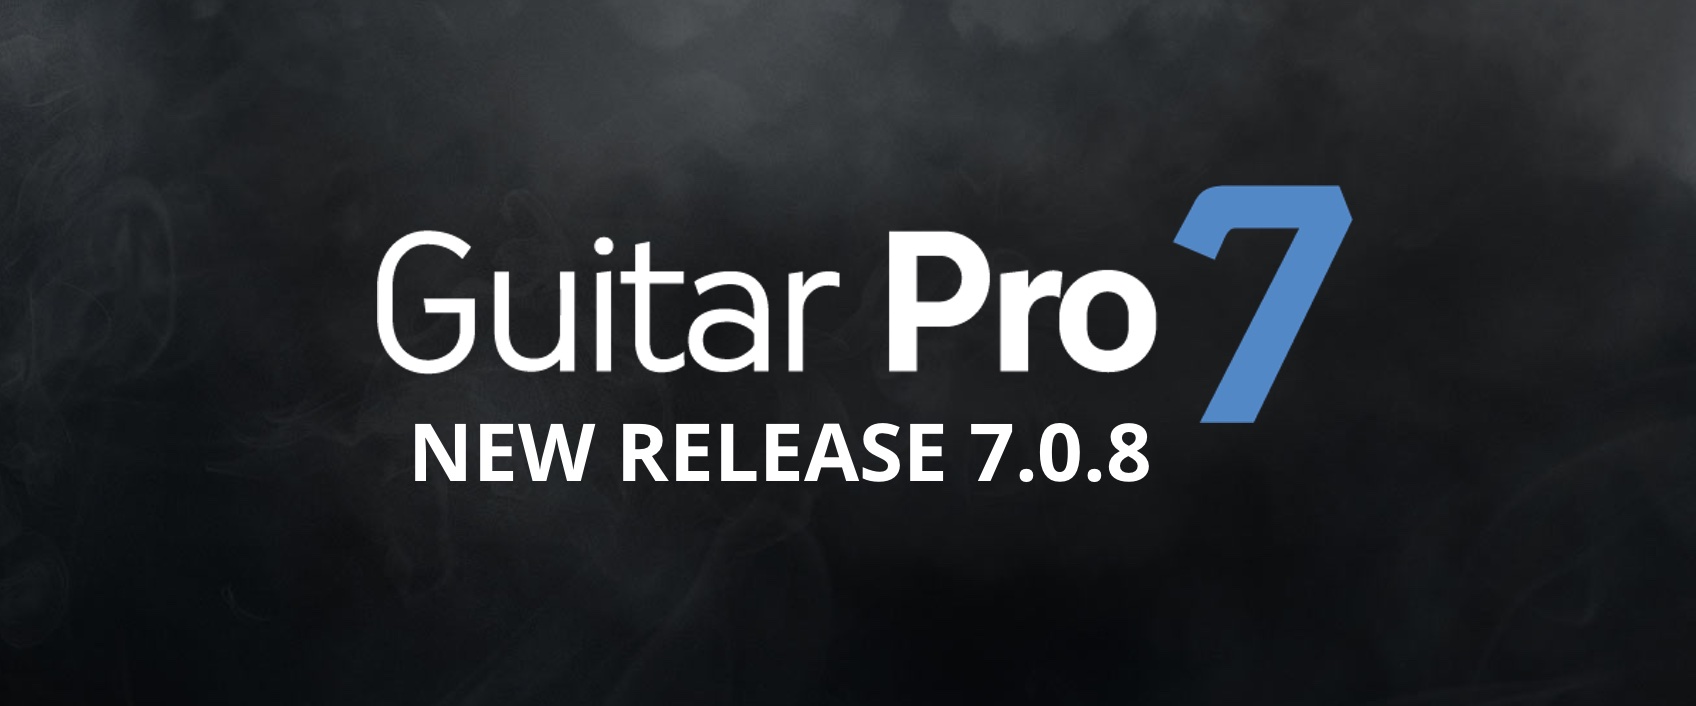 guitar pro 7 trial download